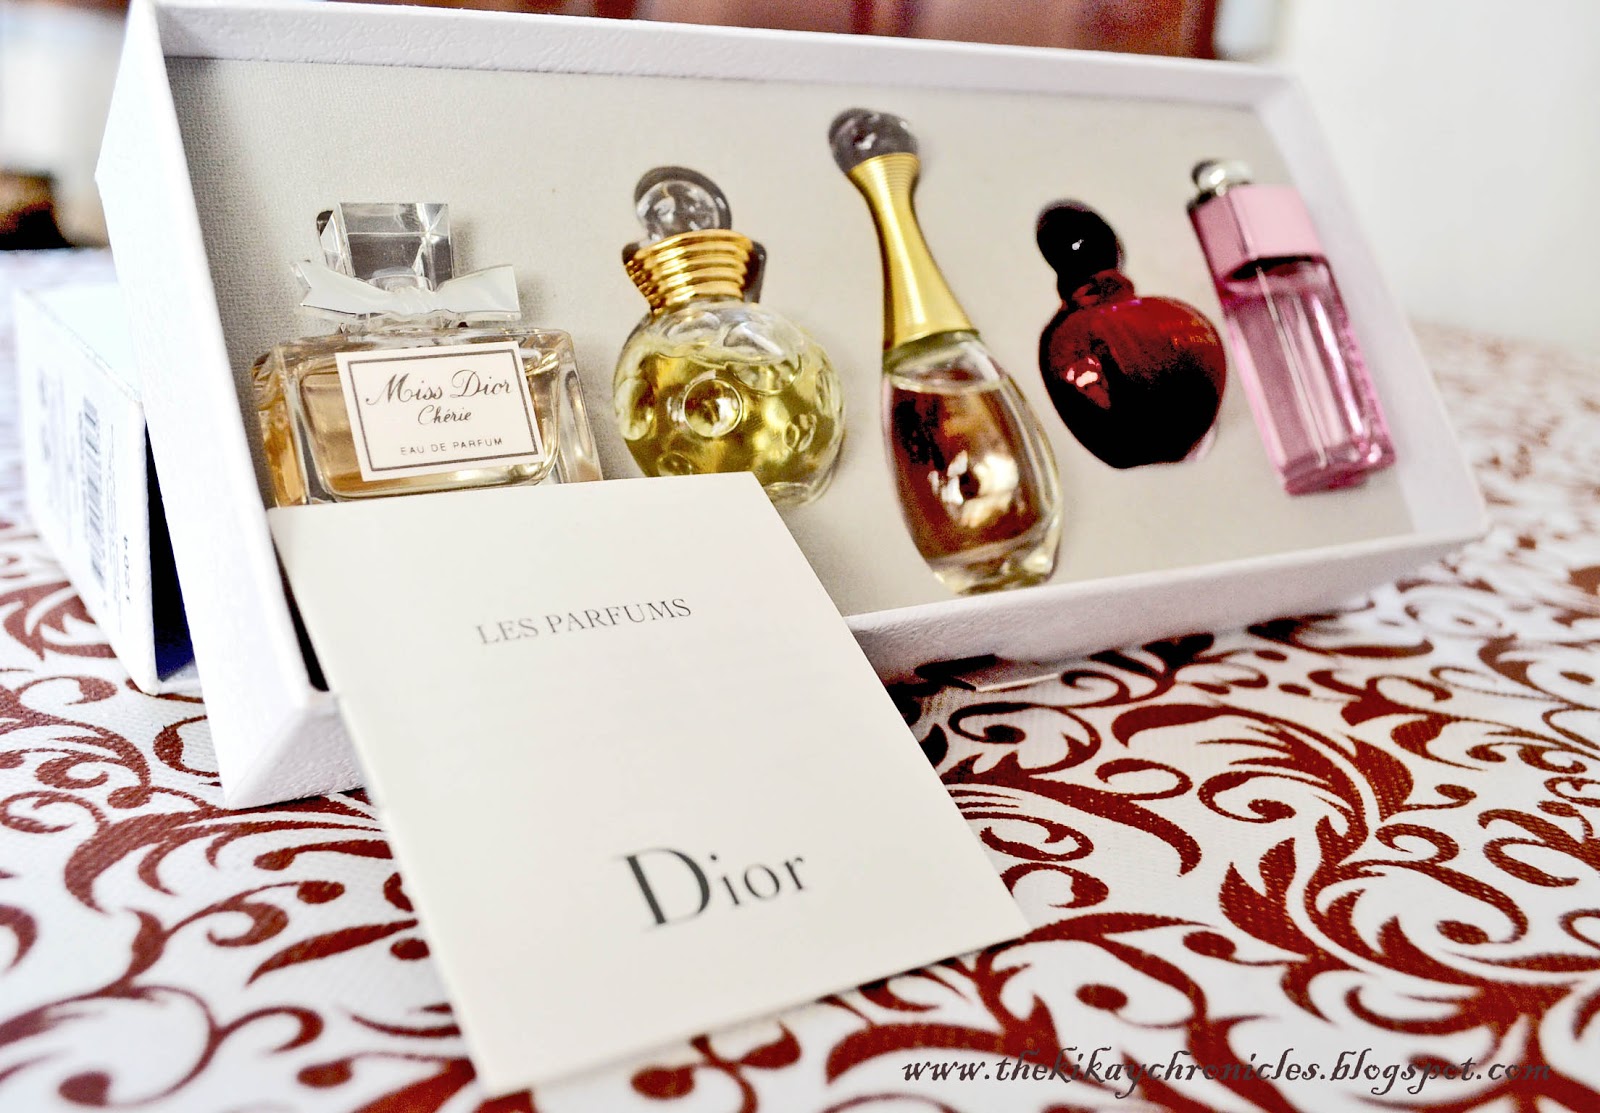 christian dior mini perfume set